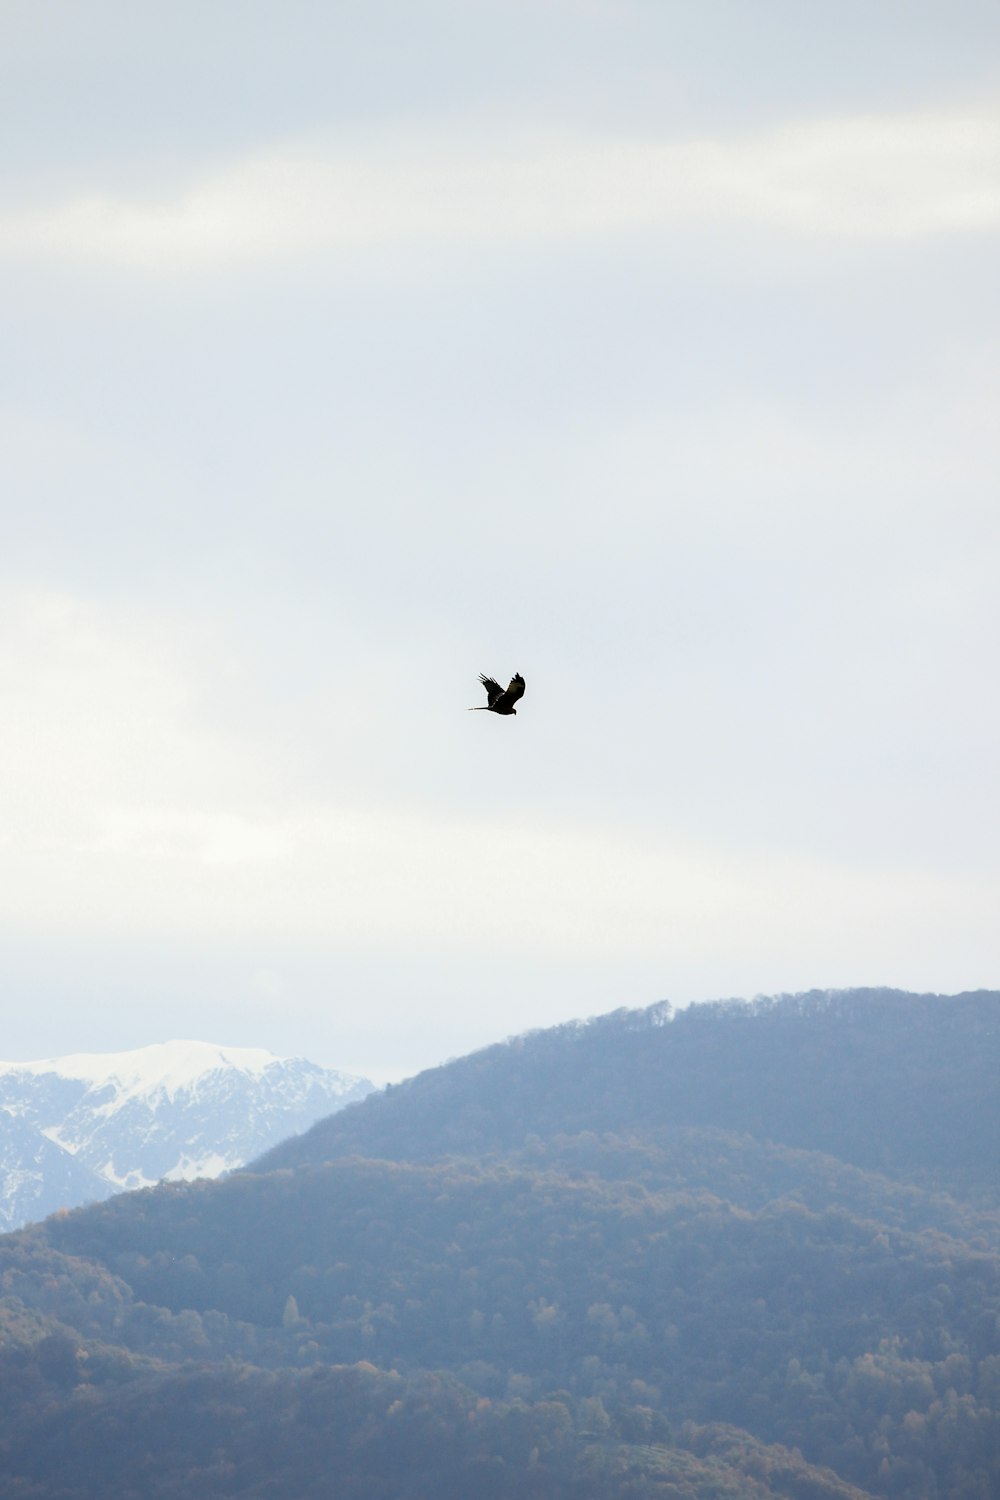 black bird in flight over hills